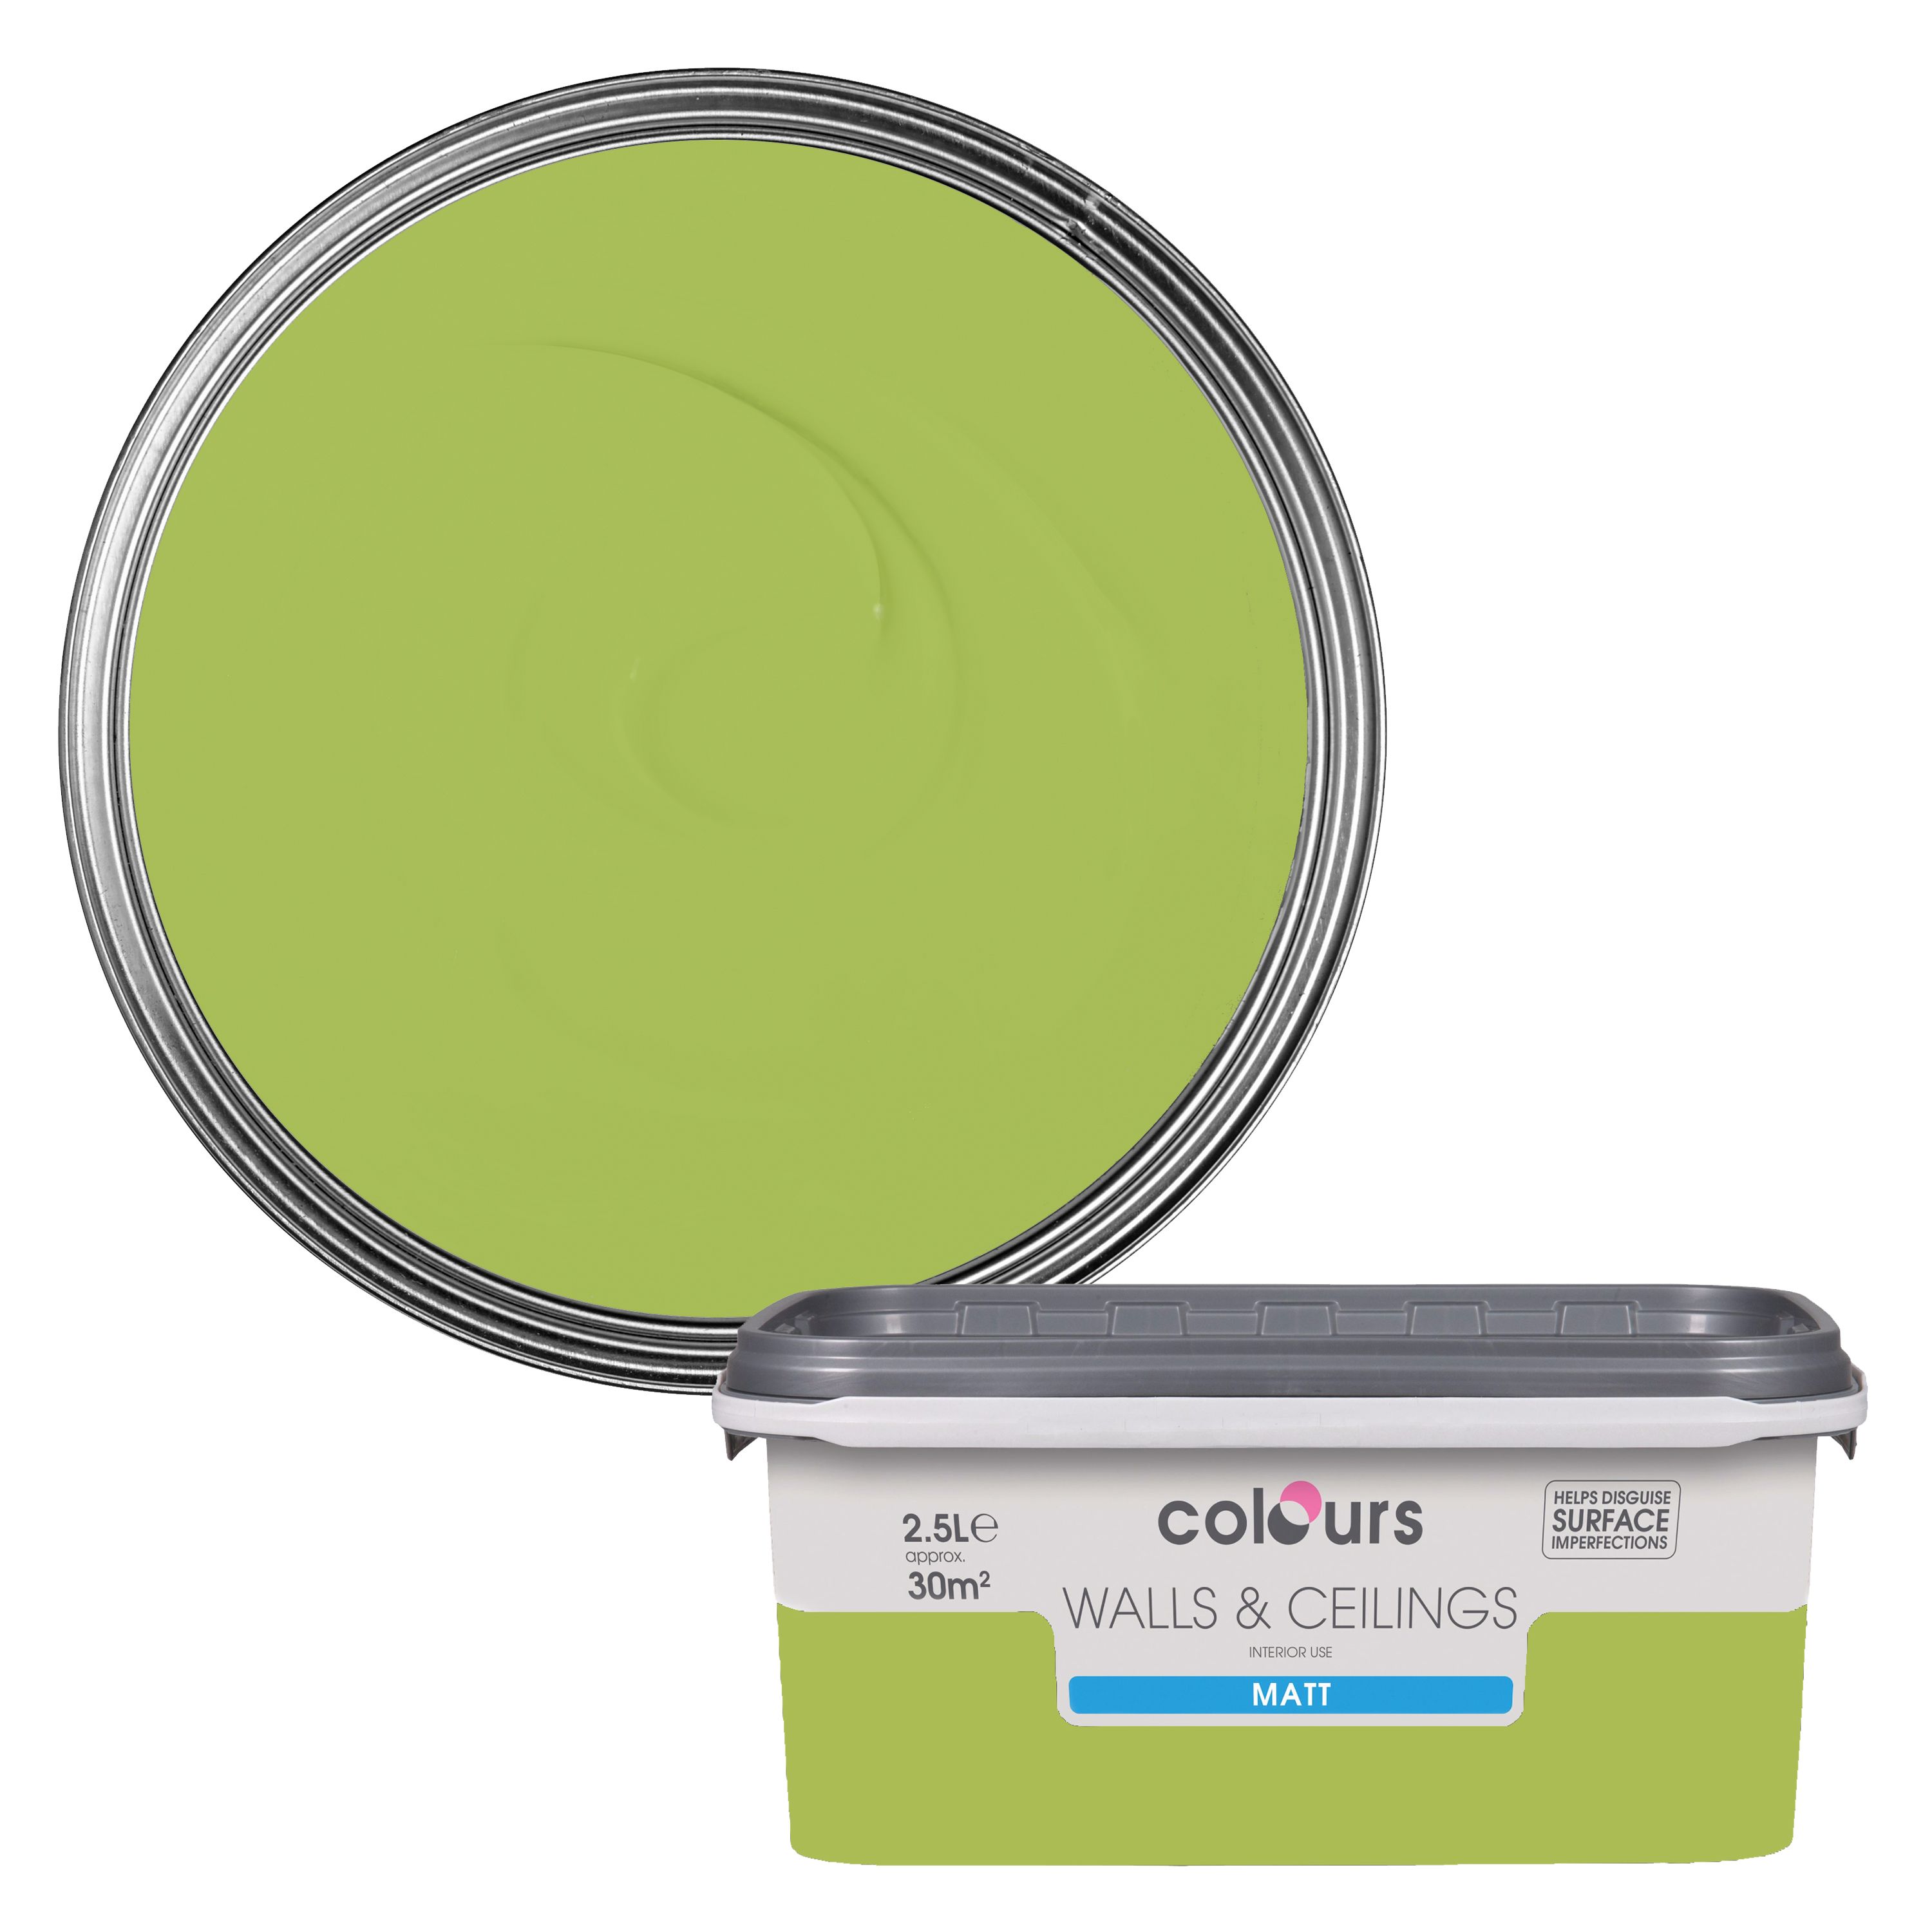 Colours Standard Green Apple Matt Emulsion Paint 2 5l Departments Diy At B Q